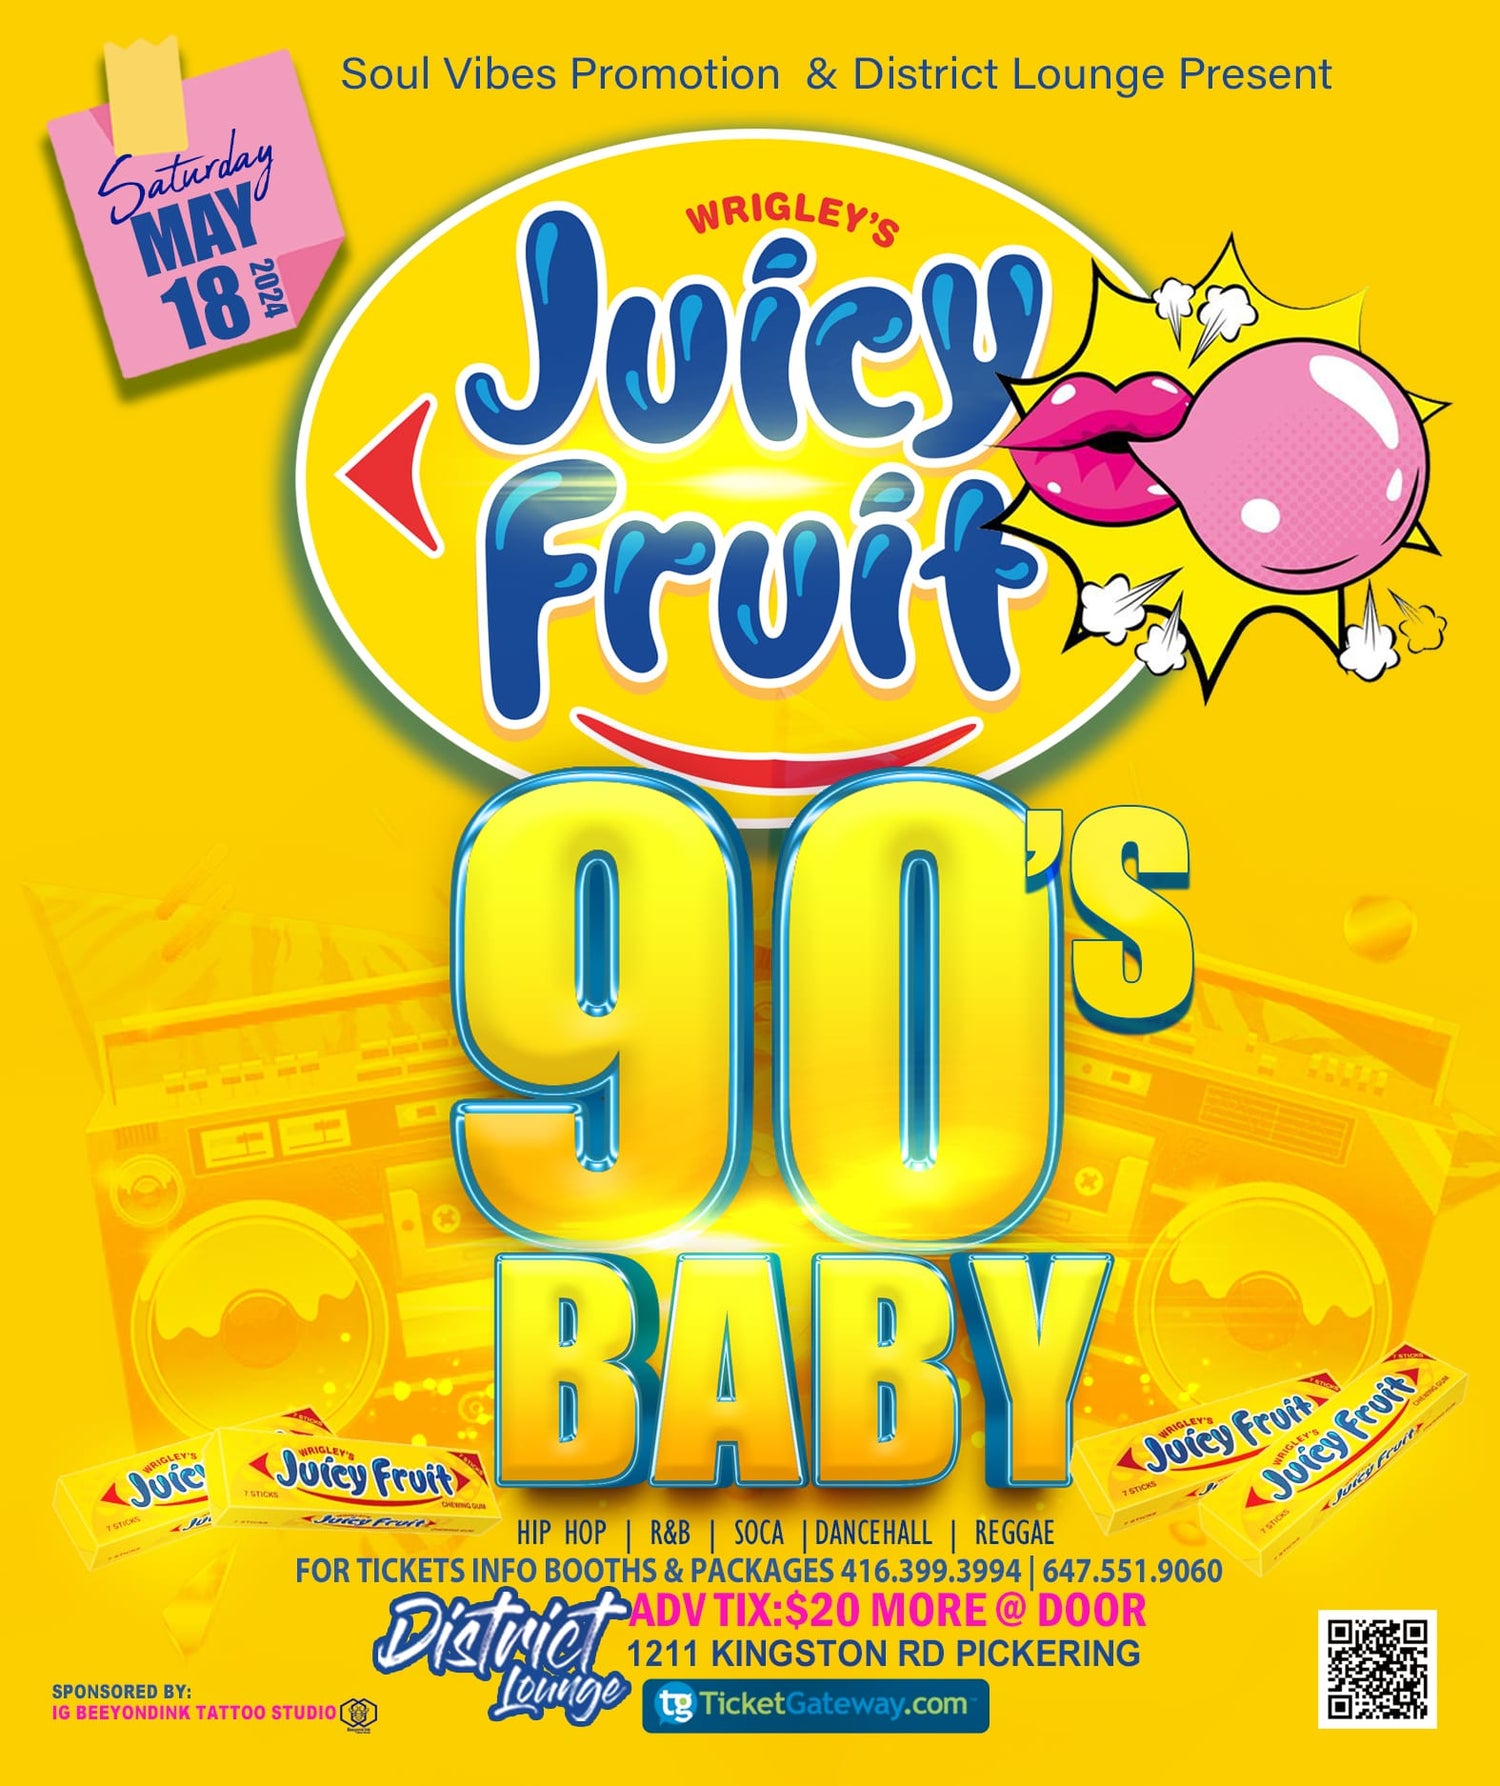 90s baby old school party juicy fruit edition